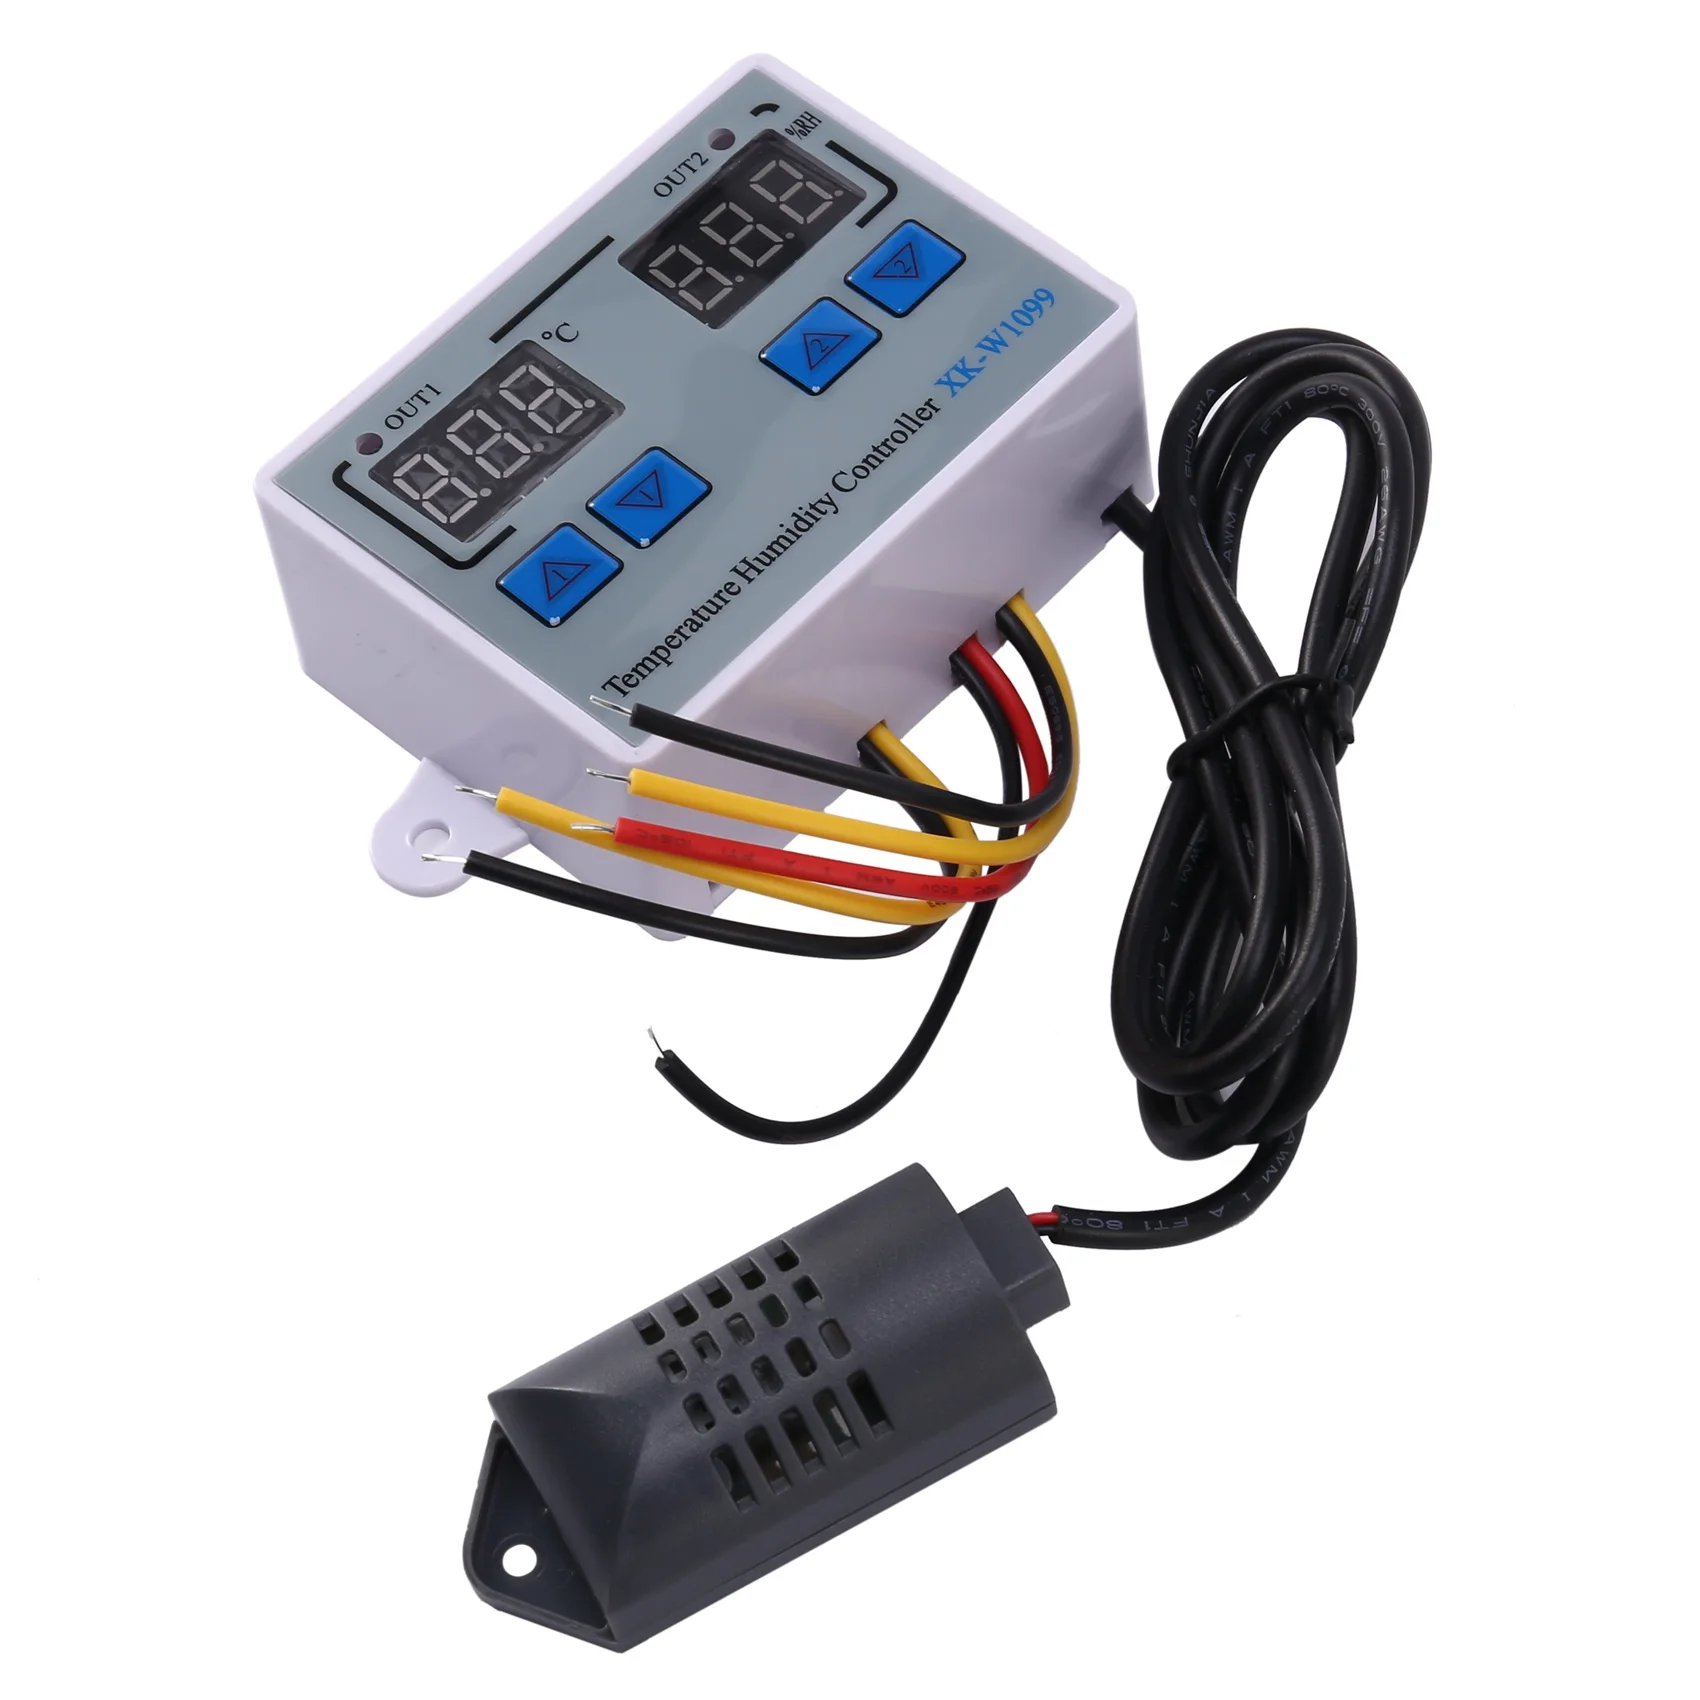 

XK-W1099 Dual Digital Thermostat Humidistat Egg Incubator Temperature Humidity Controller Regulator Thermometer Hygrometer 11